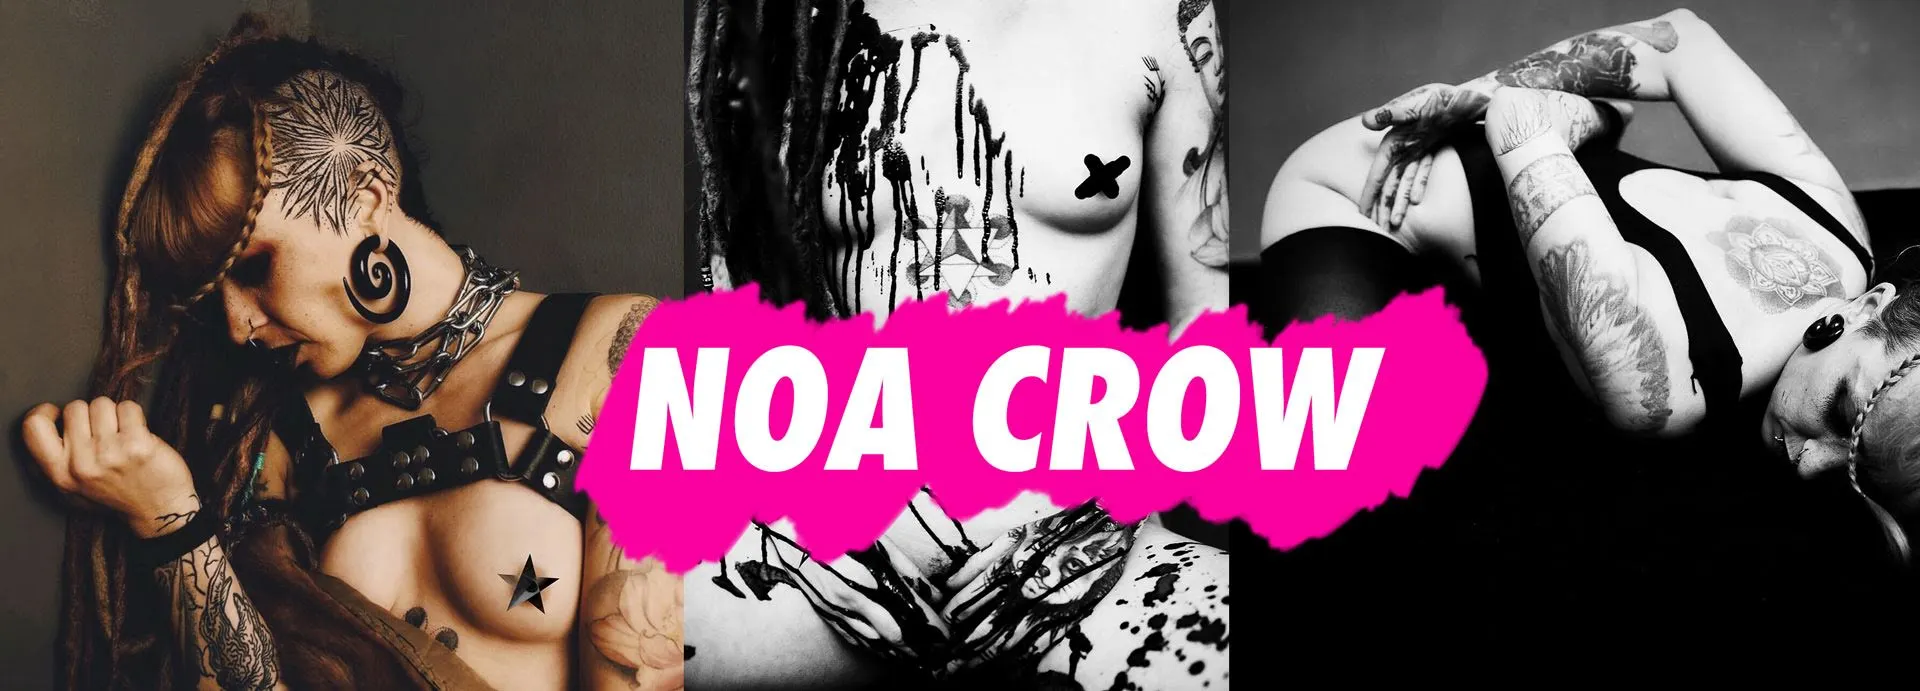 Noa Crow Latex